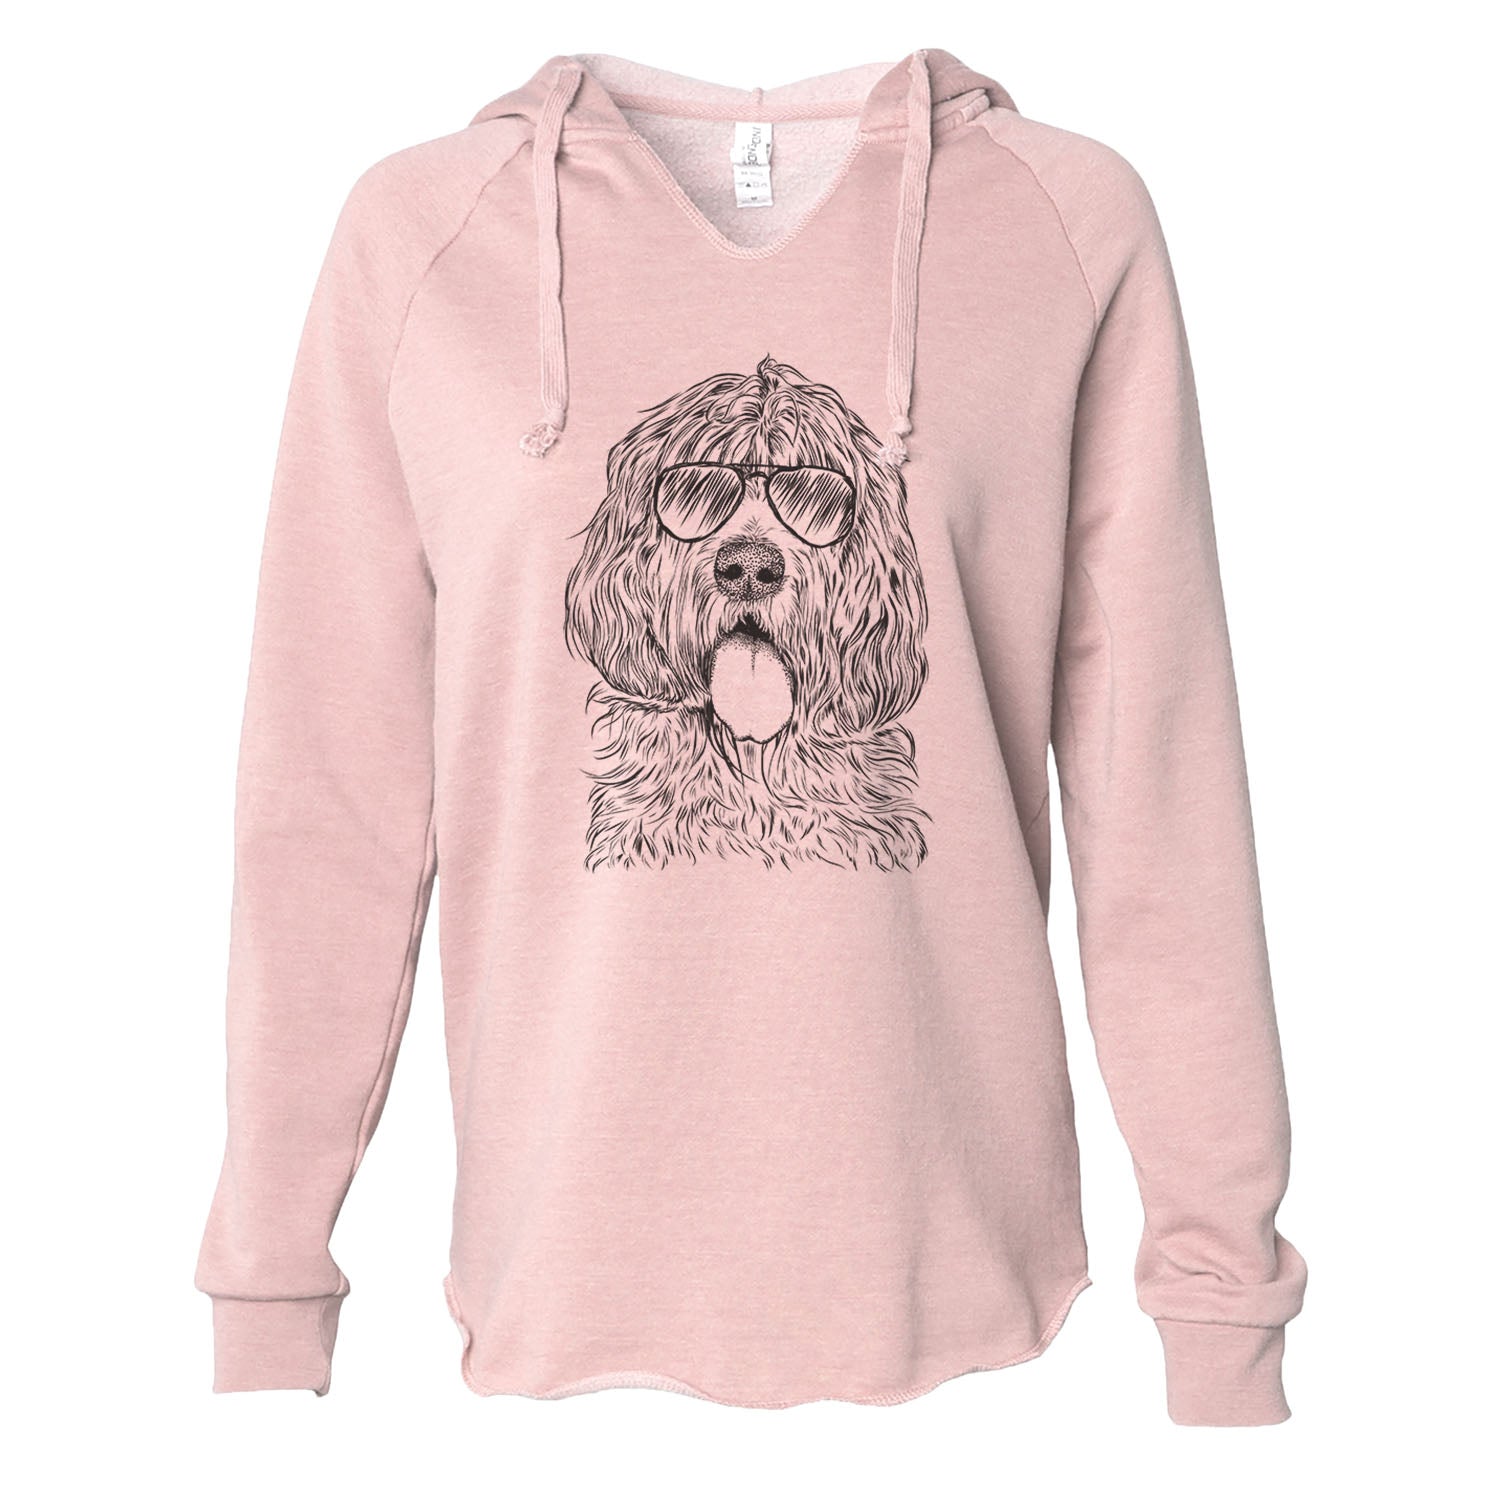 Lou the Otterhound - Cali Wave Hooded Sweatshirt